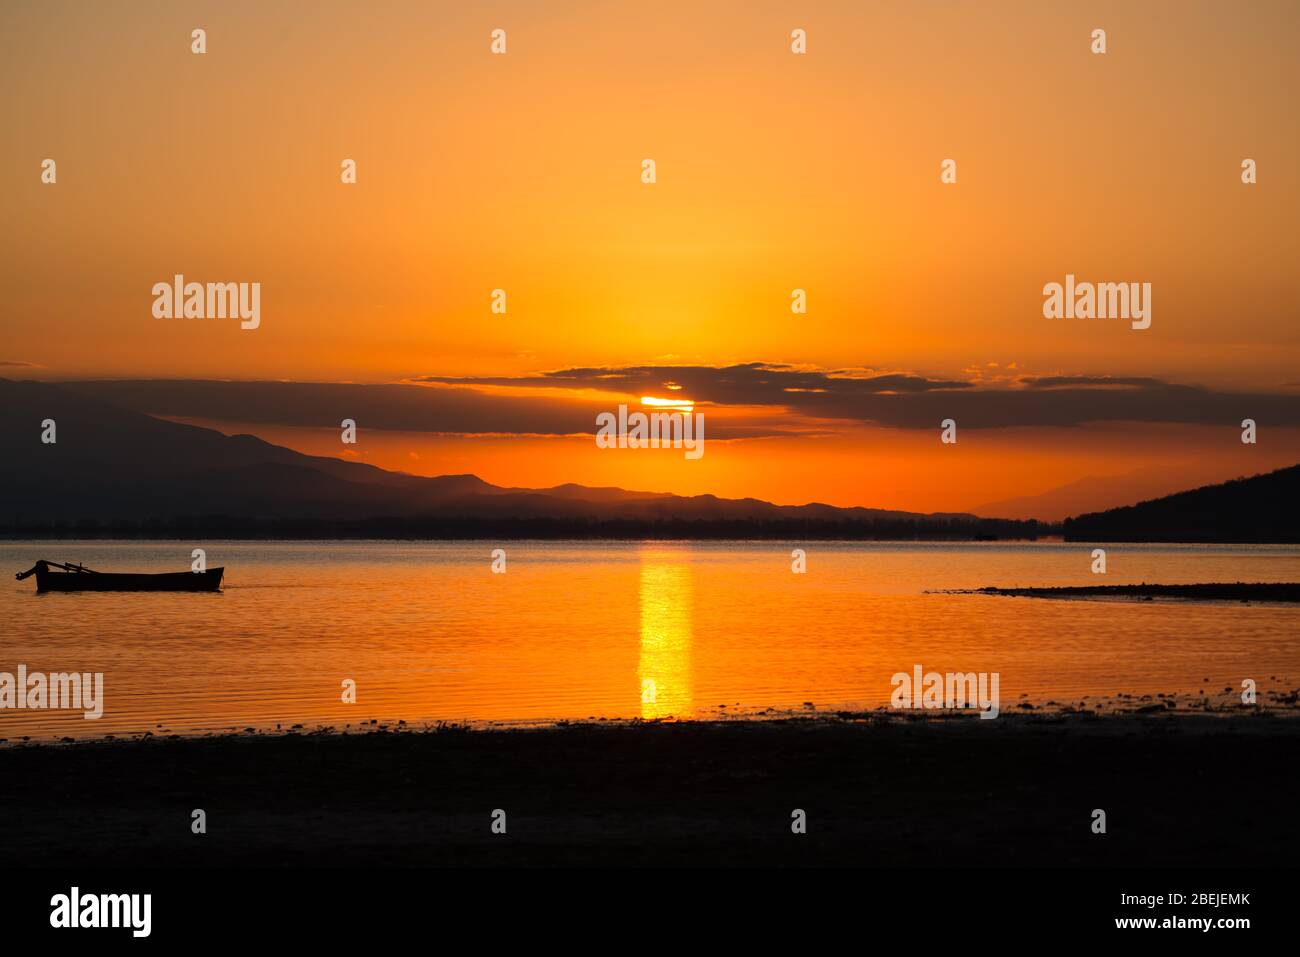 Beautiful orange sunrise over the clam lake with boat silhouette Background. Stock Photo